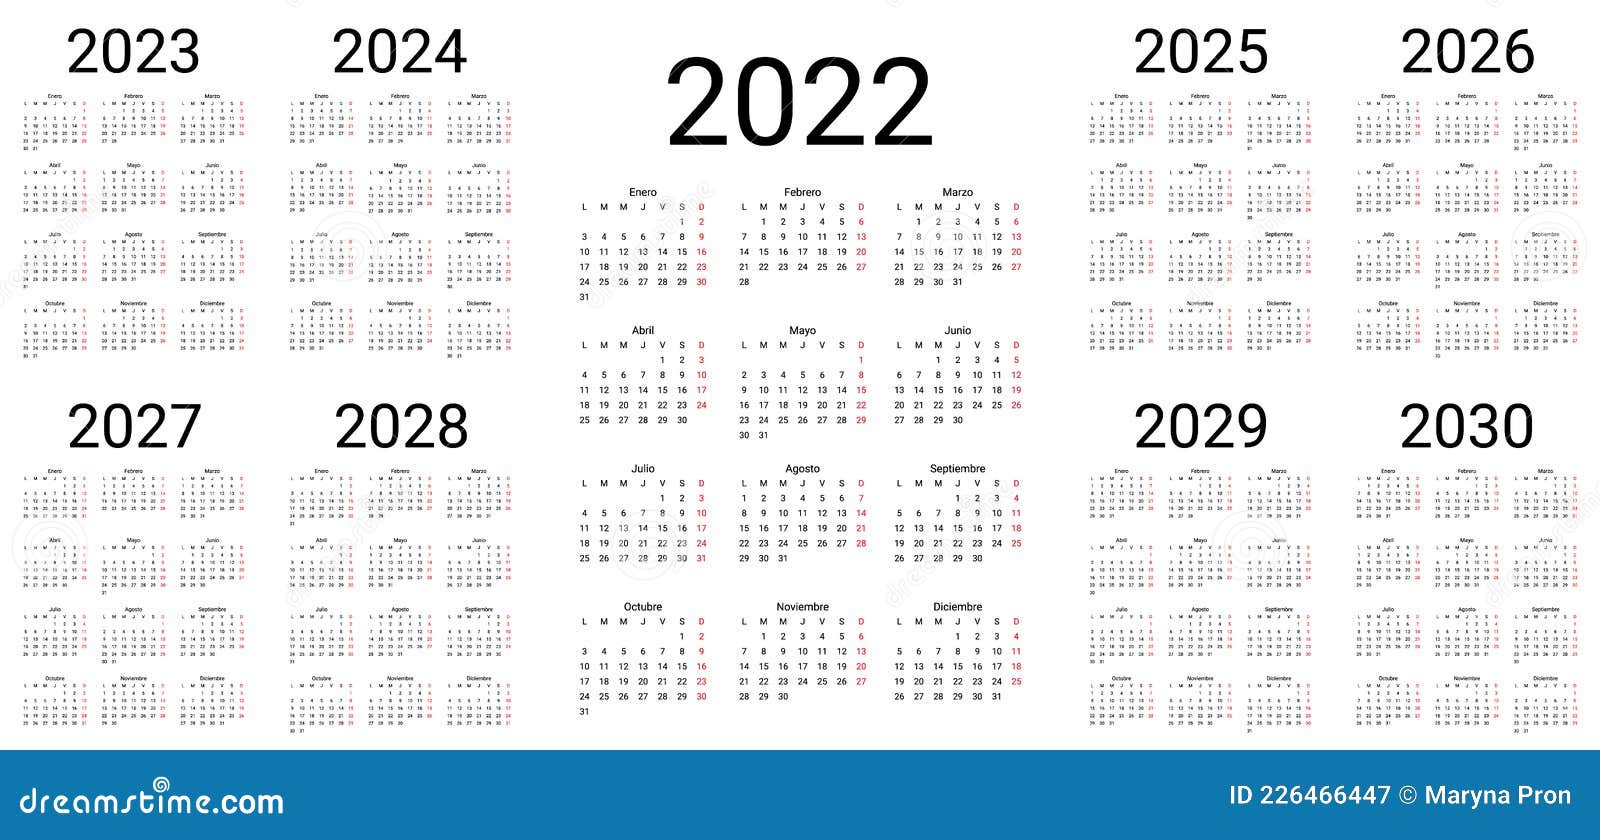 spanish-calendar-2022-2023-2024-2025-2026-2027-2028-2029-2030-years-simple-pocket